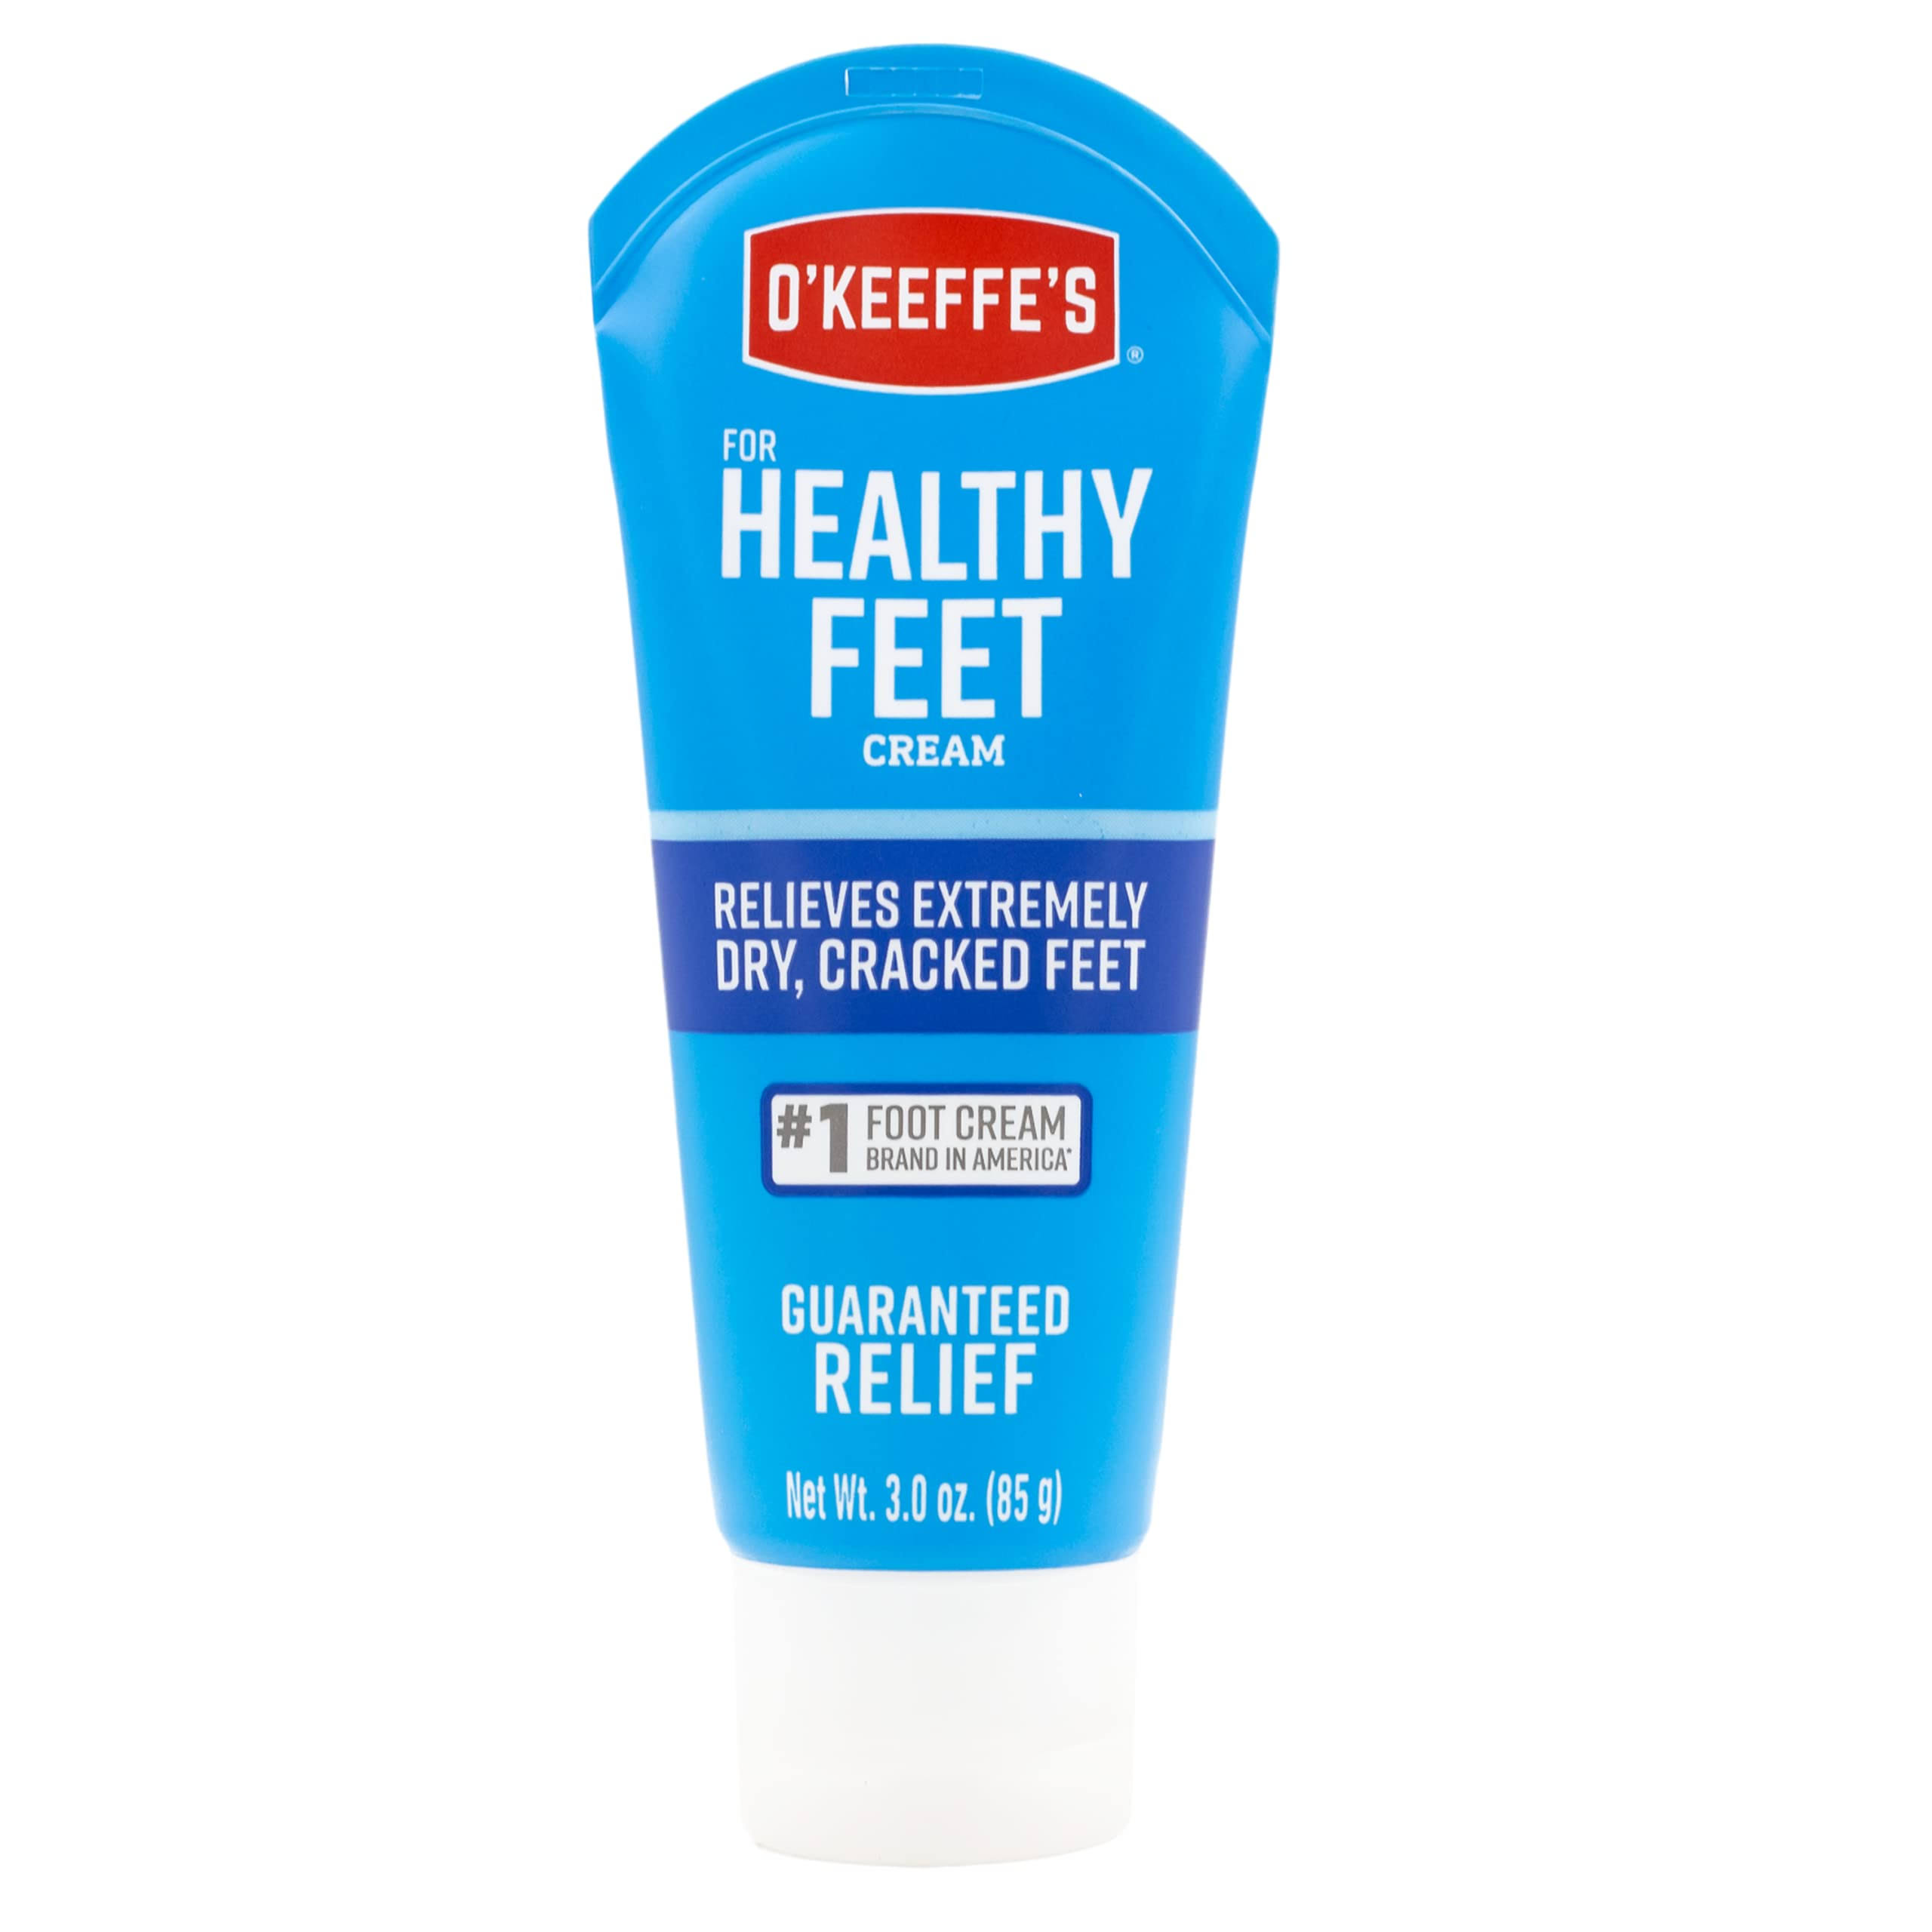 O'Keeffe's for Healthy Feet Foot Cream - 85g